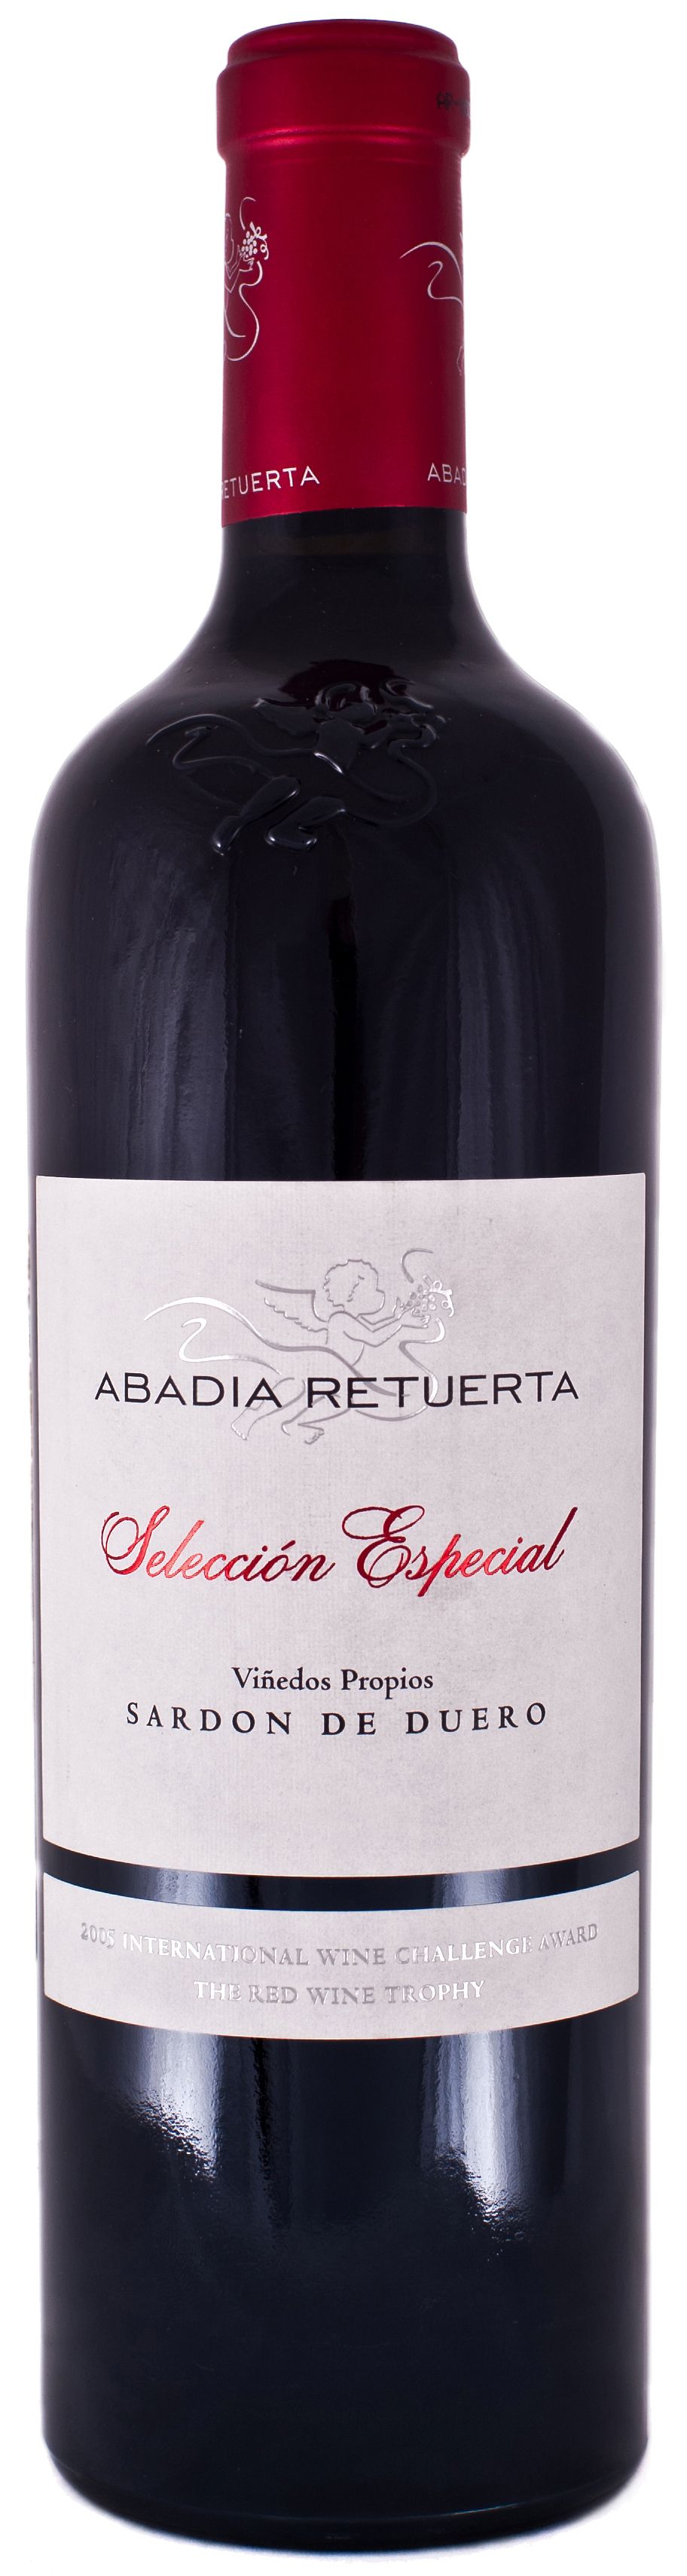 Abadia Retuerta, Seleccion Especial, 2014